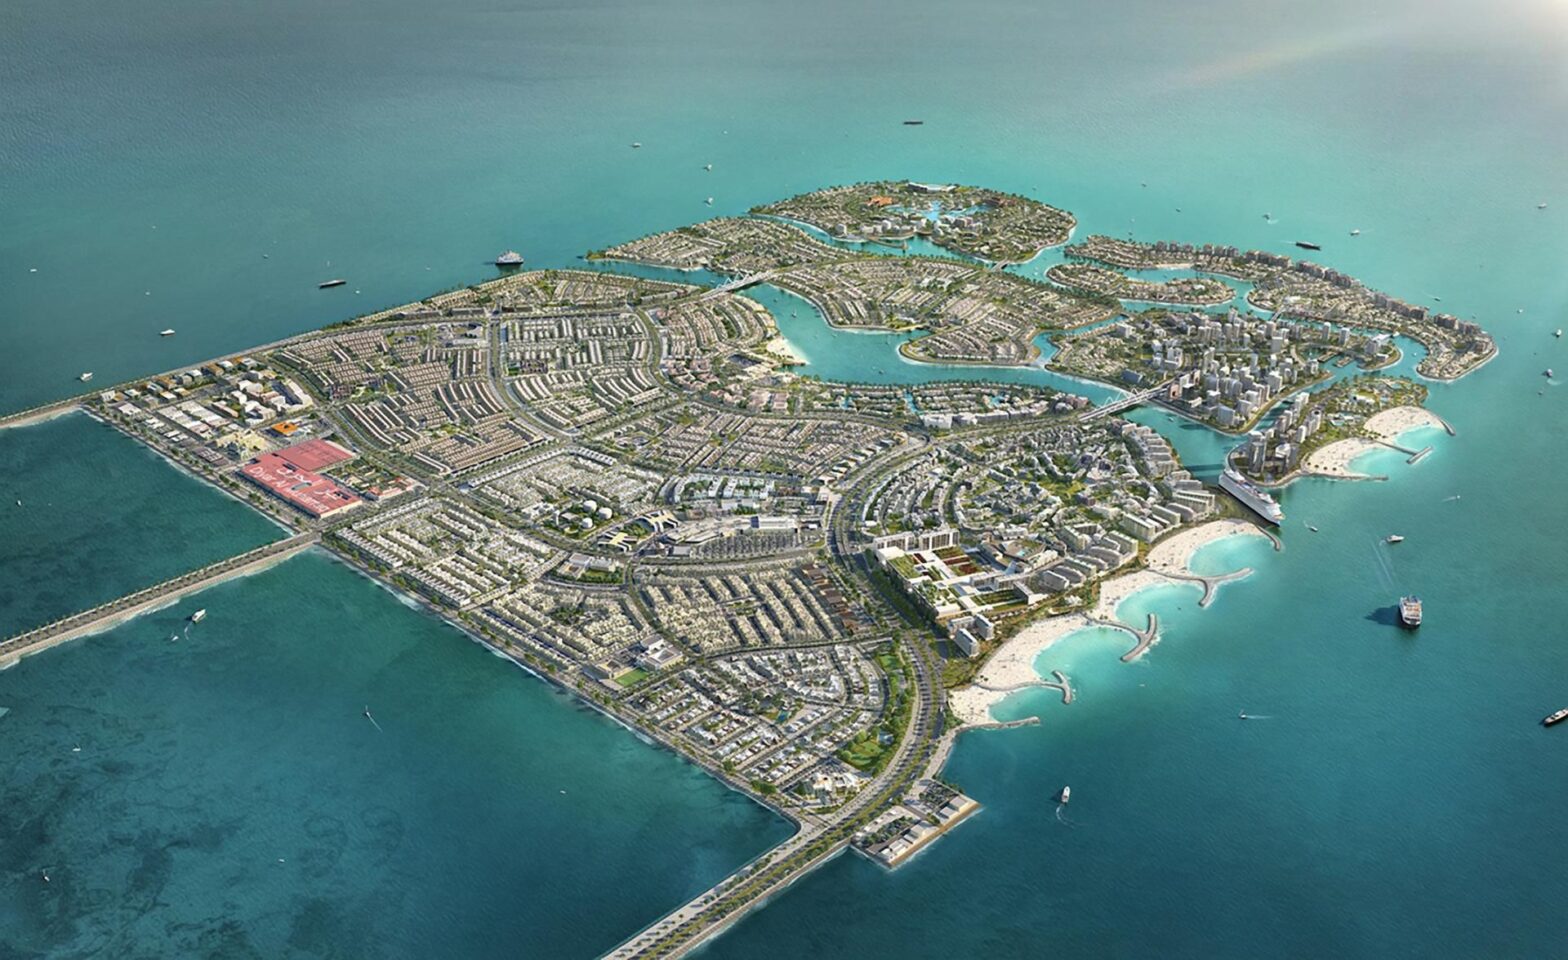 Bahrain islands